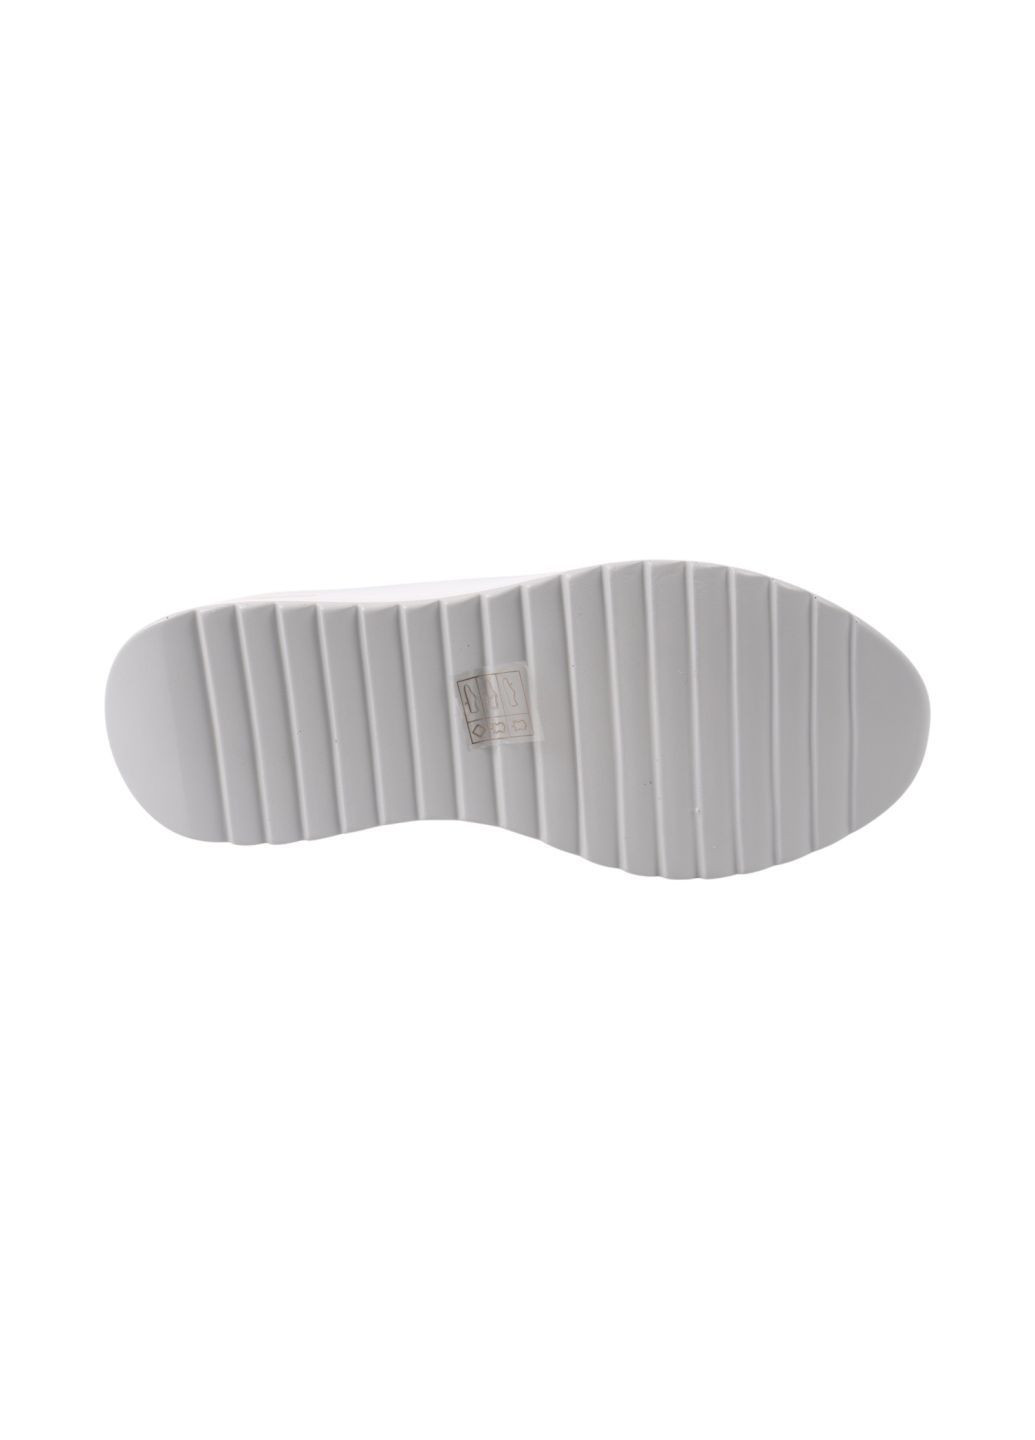 Білі кросівки жіночі білі натуральна шкіра Lifexpert 1590-24LTSP